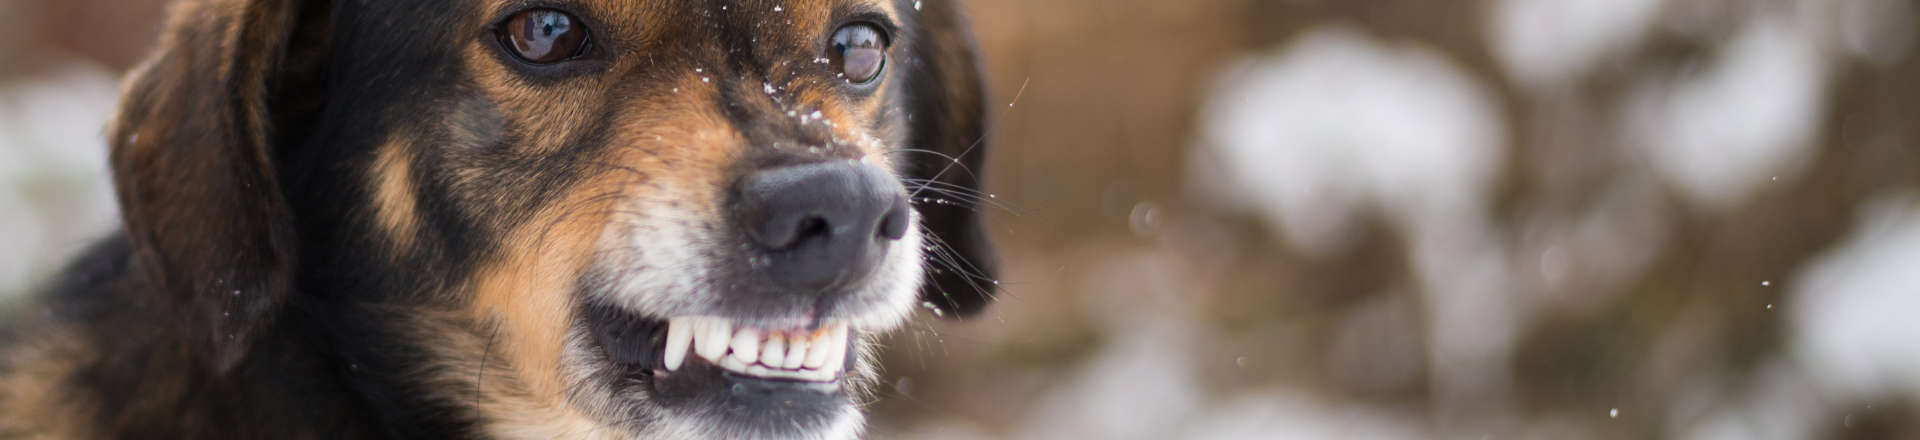 dog showing its teeth while barking